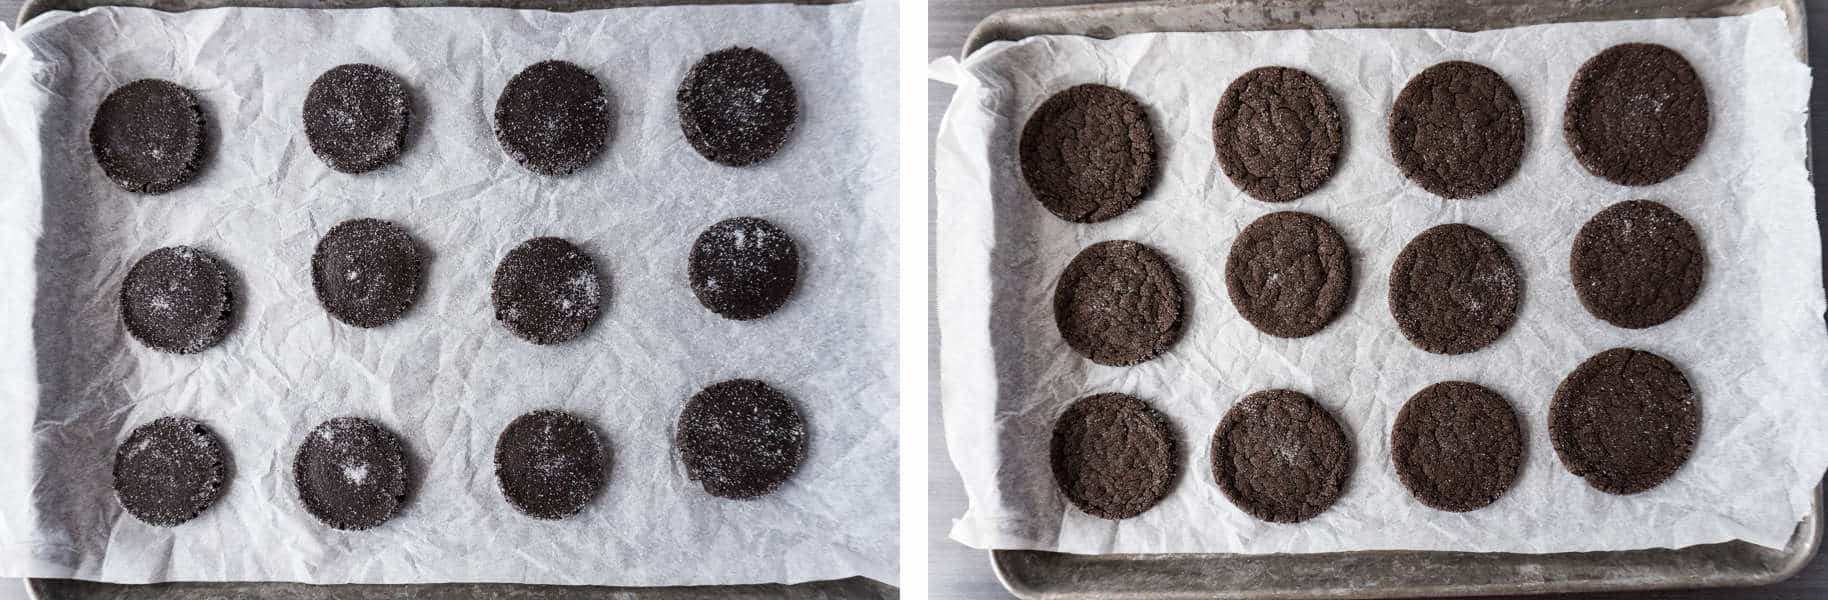 Chocolate Sugar Cookies Step 3 and Step 4